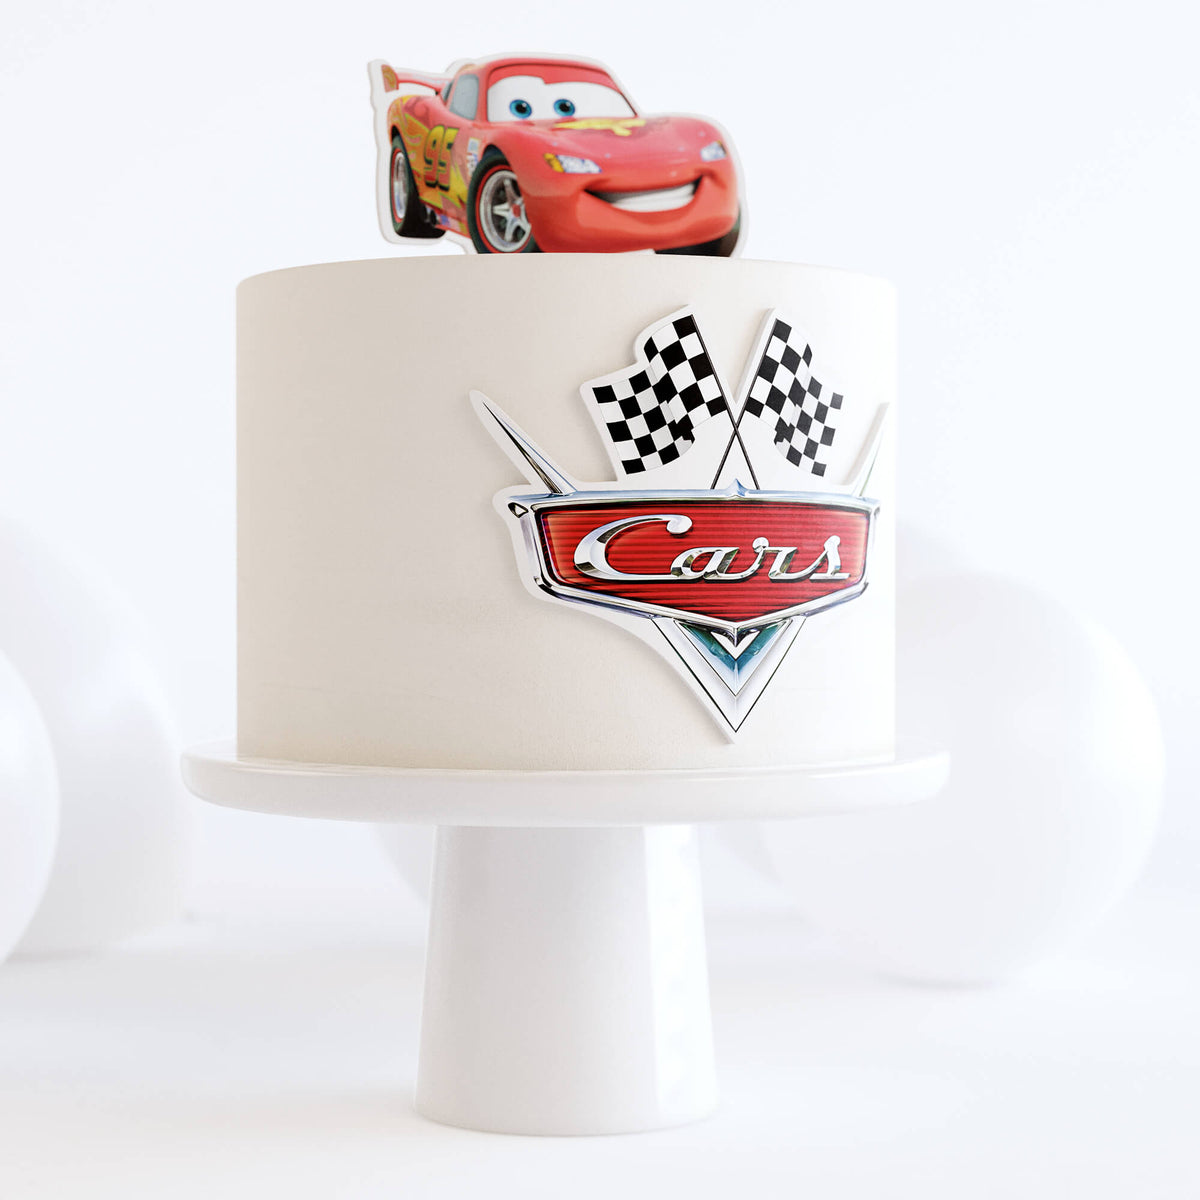 Bolo de aniversário menino Cars pasta de açúcar – Love In a Cake